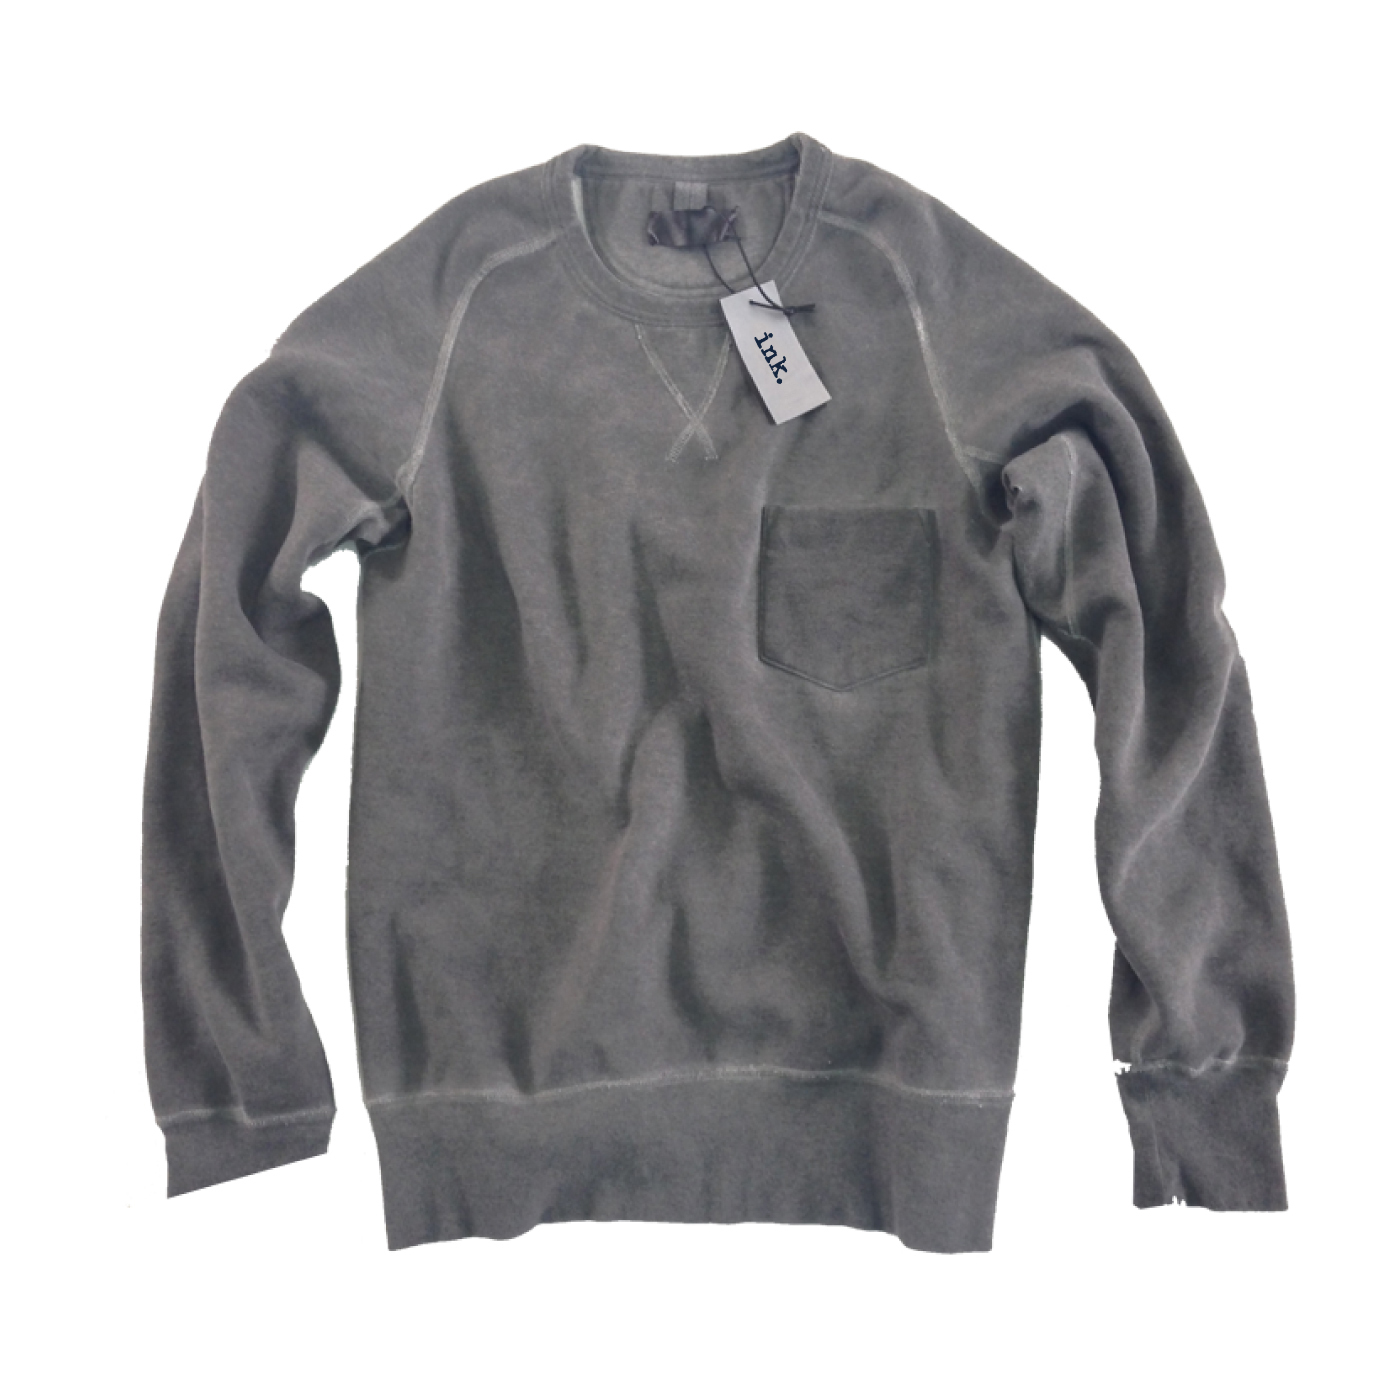 Pollock-grey-crew-neck-sweater-with-pocket-1-1